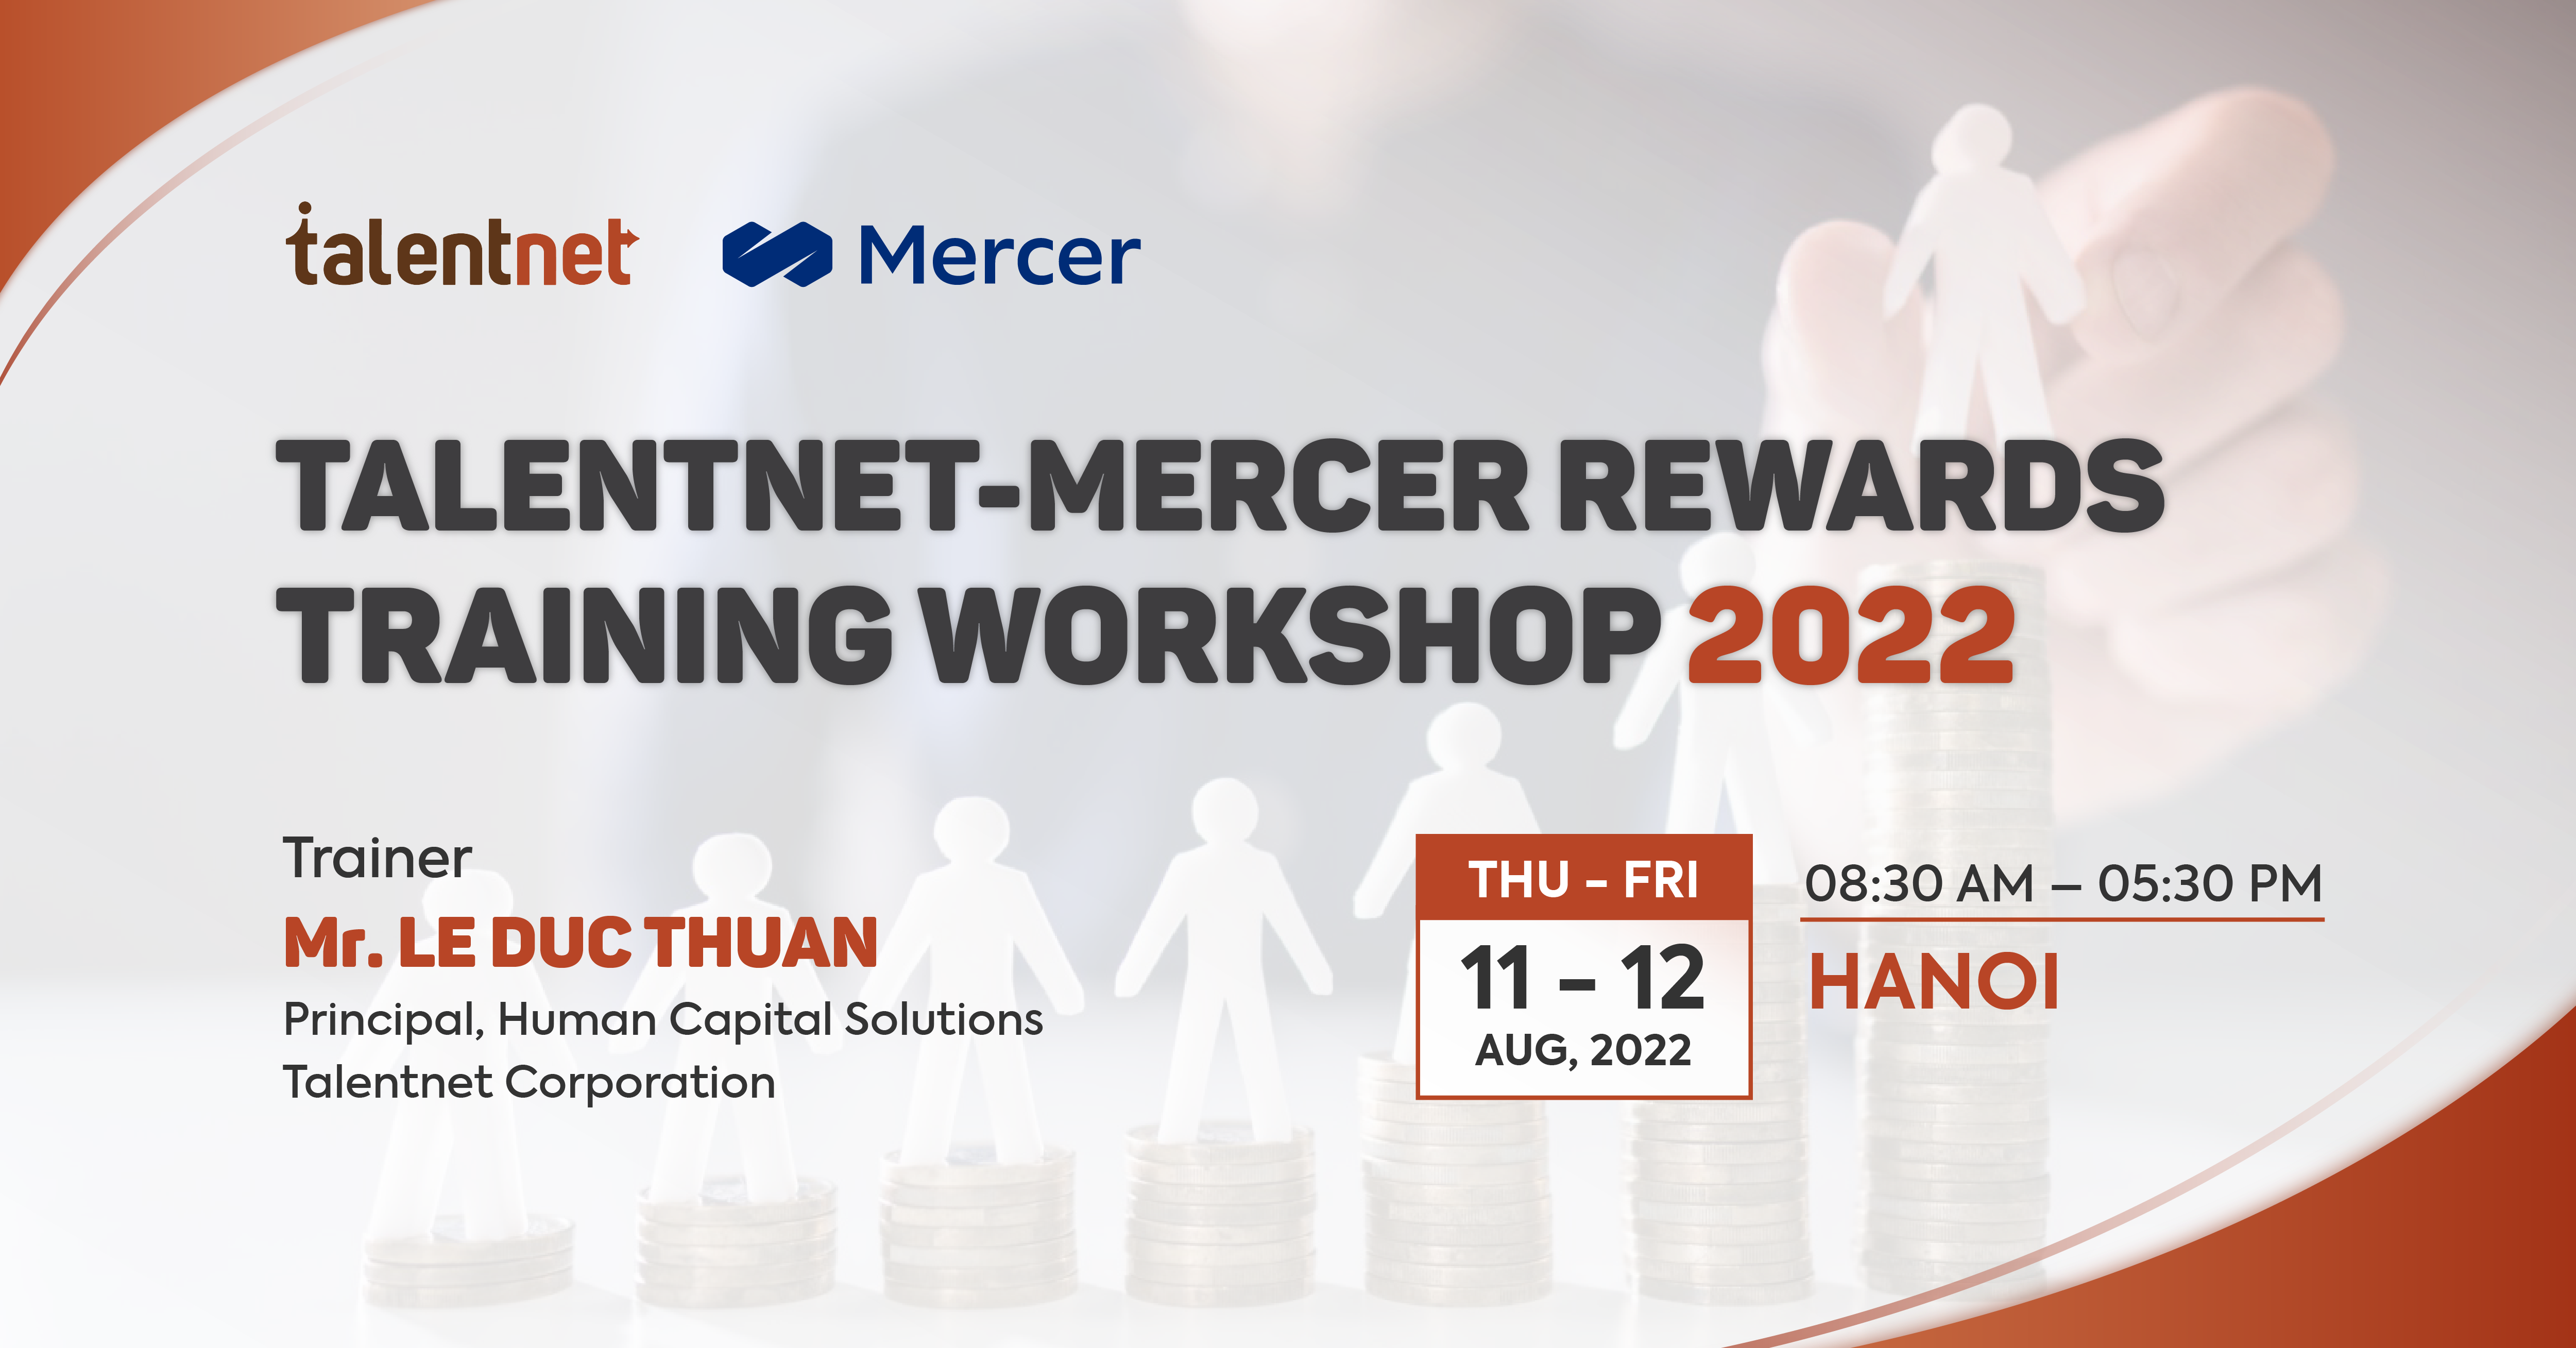 Talentnet - Mercer Rewards Training Workshop 2022 In Hanoi